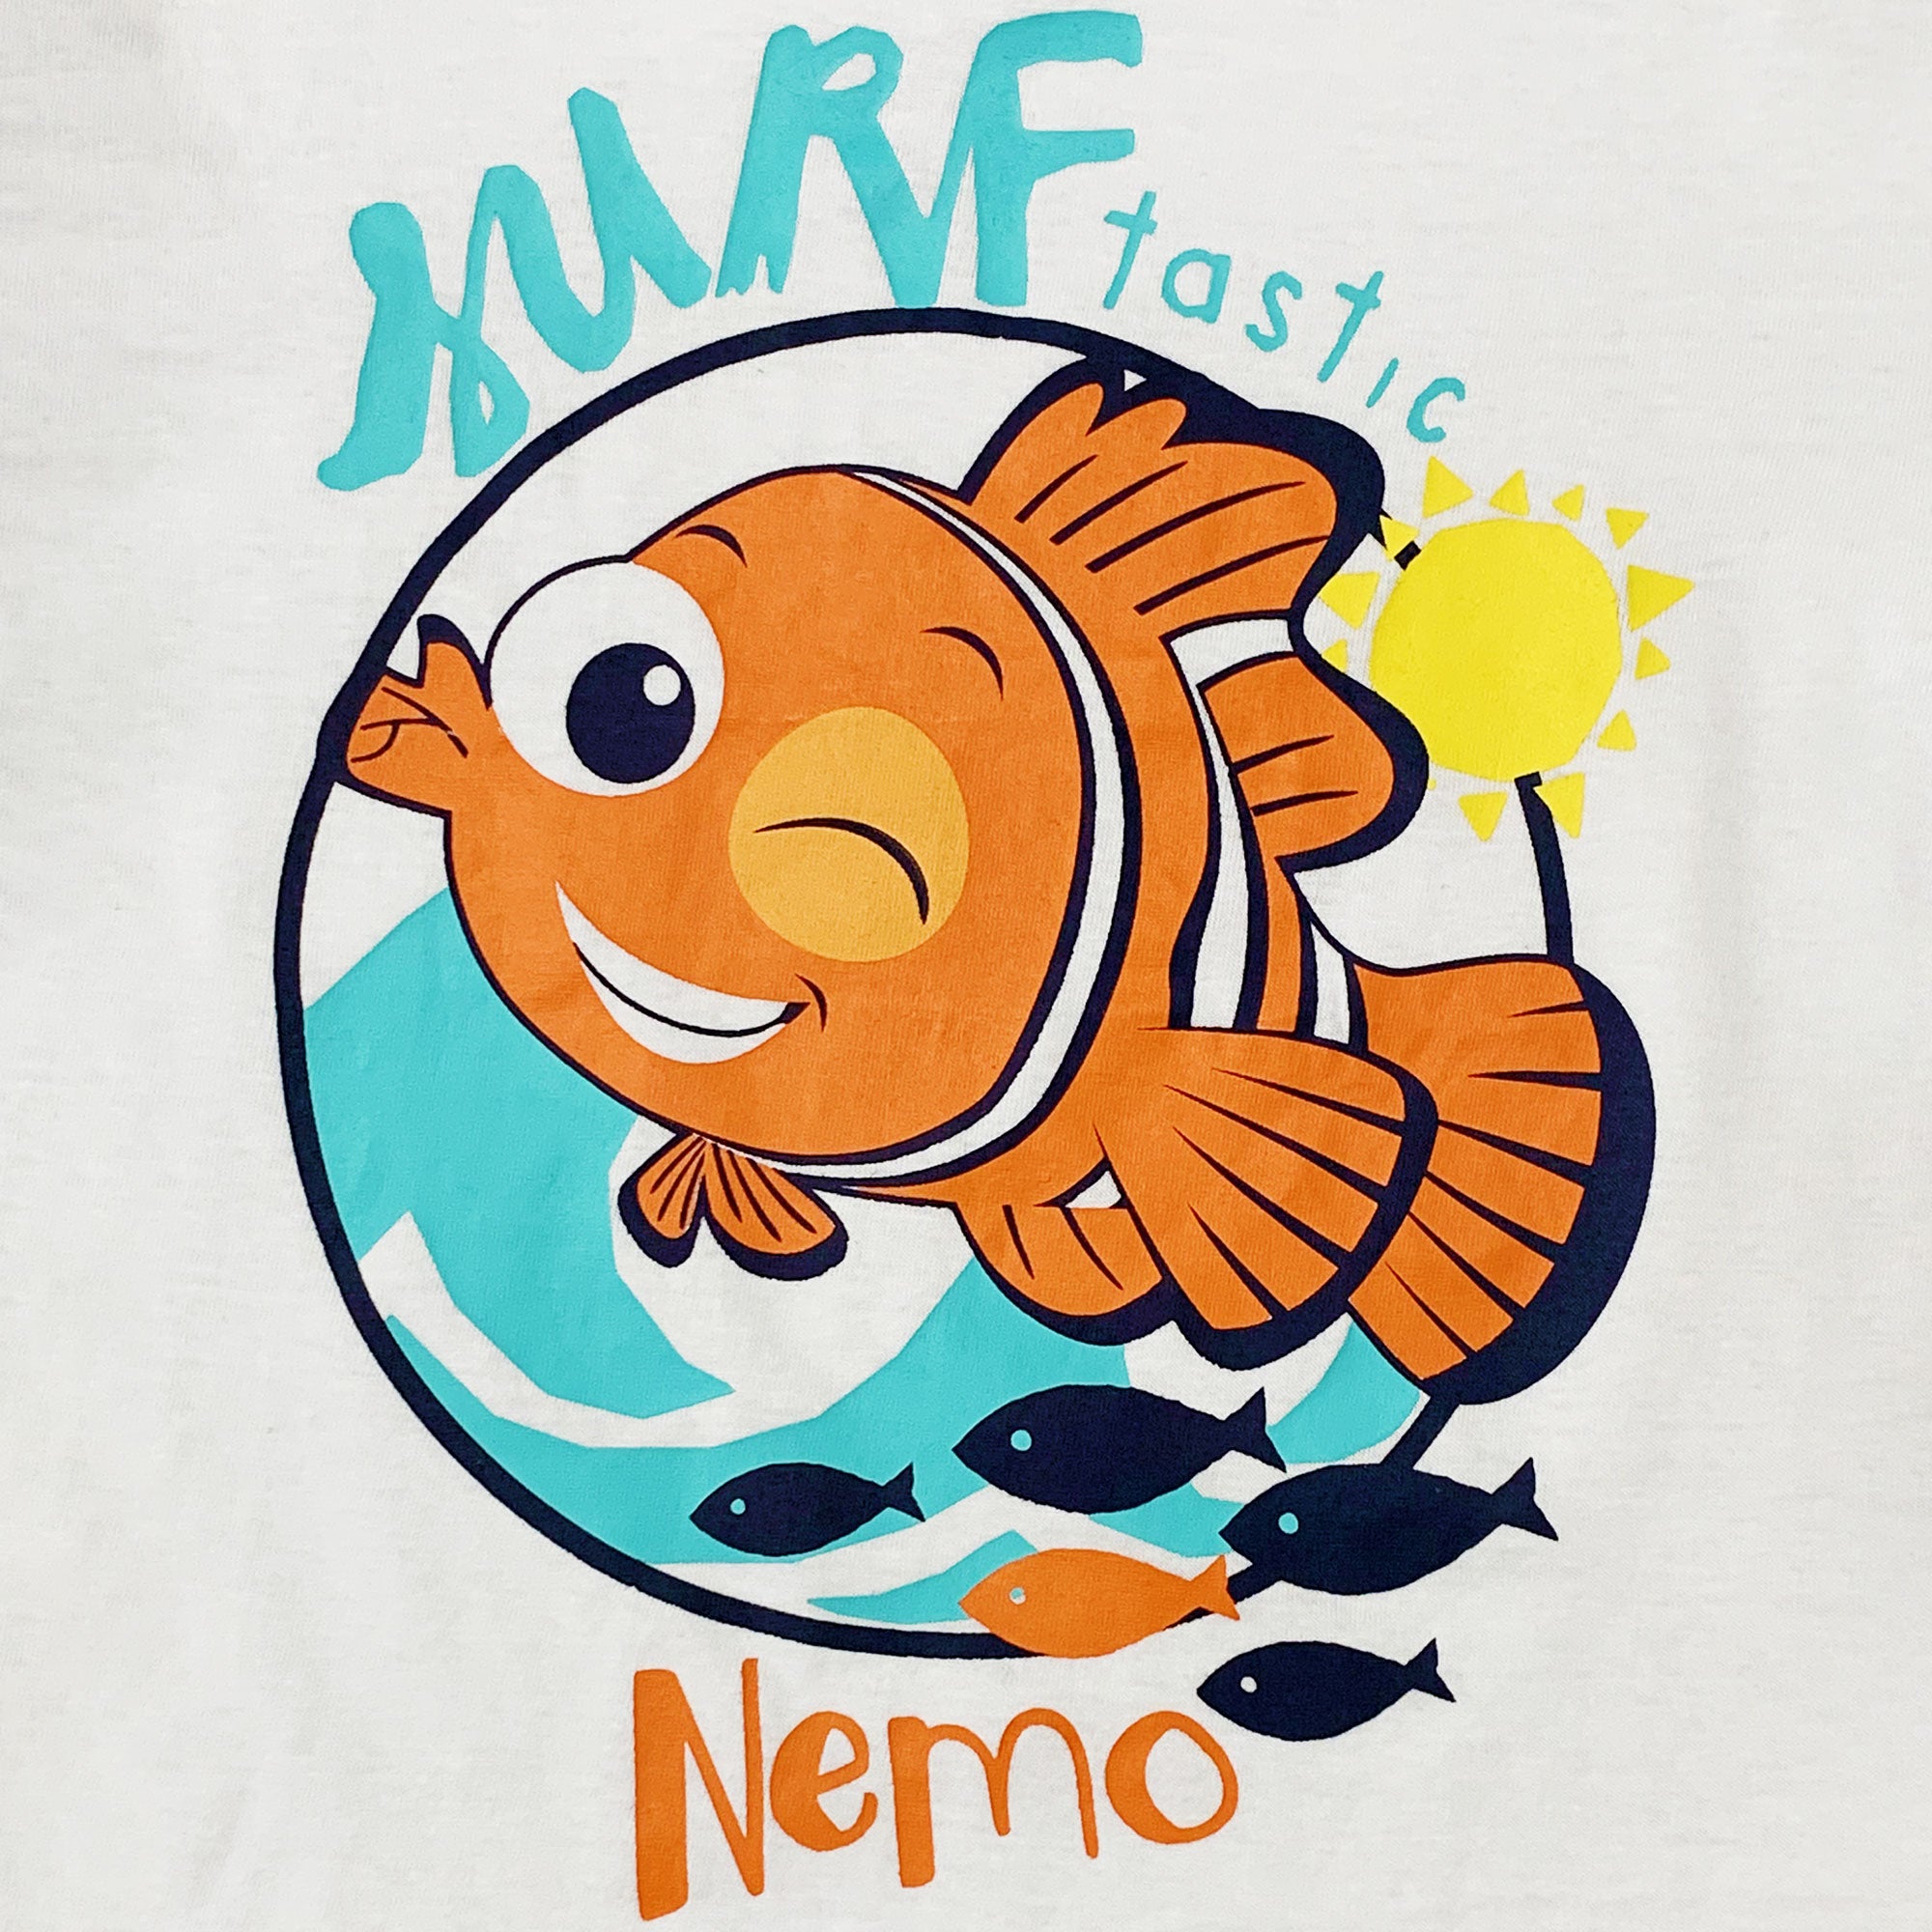 Pigiama bambino Disney Nemo t-shirt e pantaloncino in cotone estivo 6029